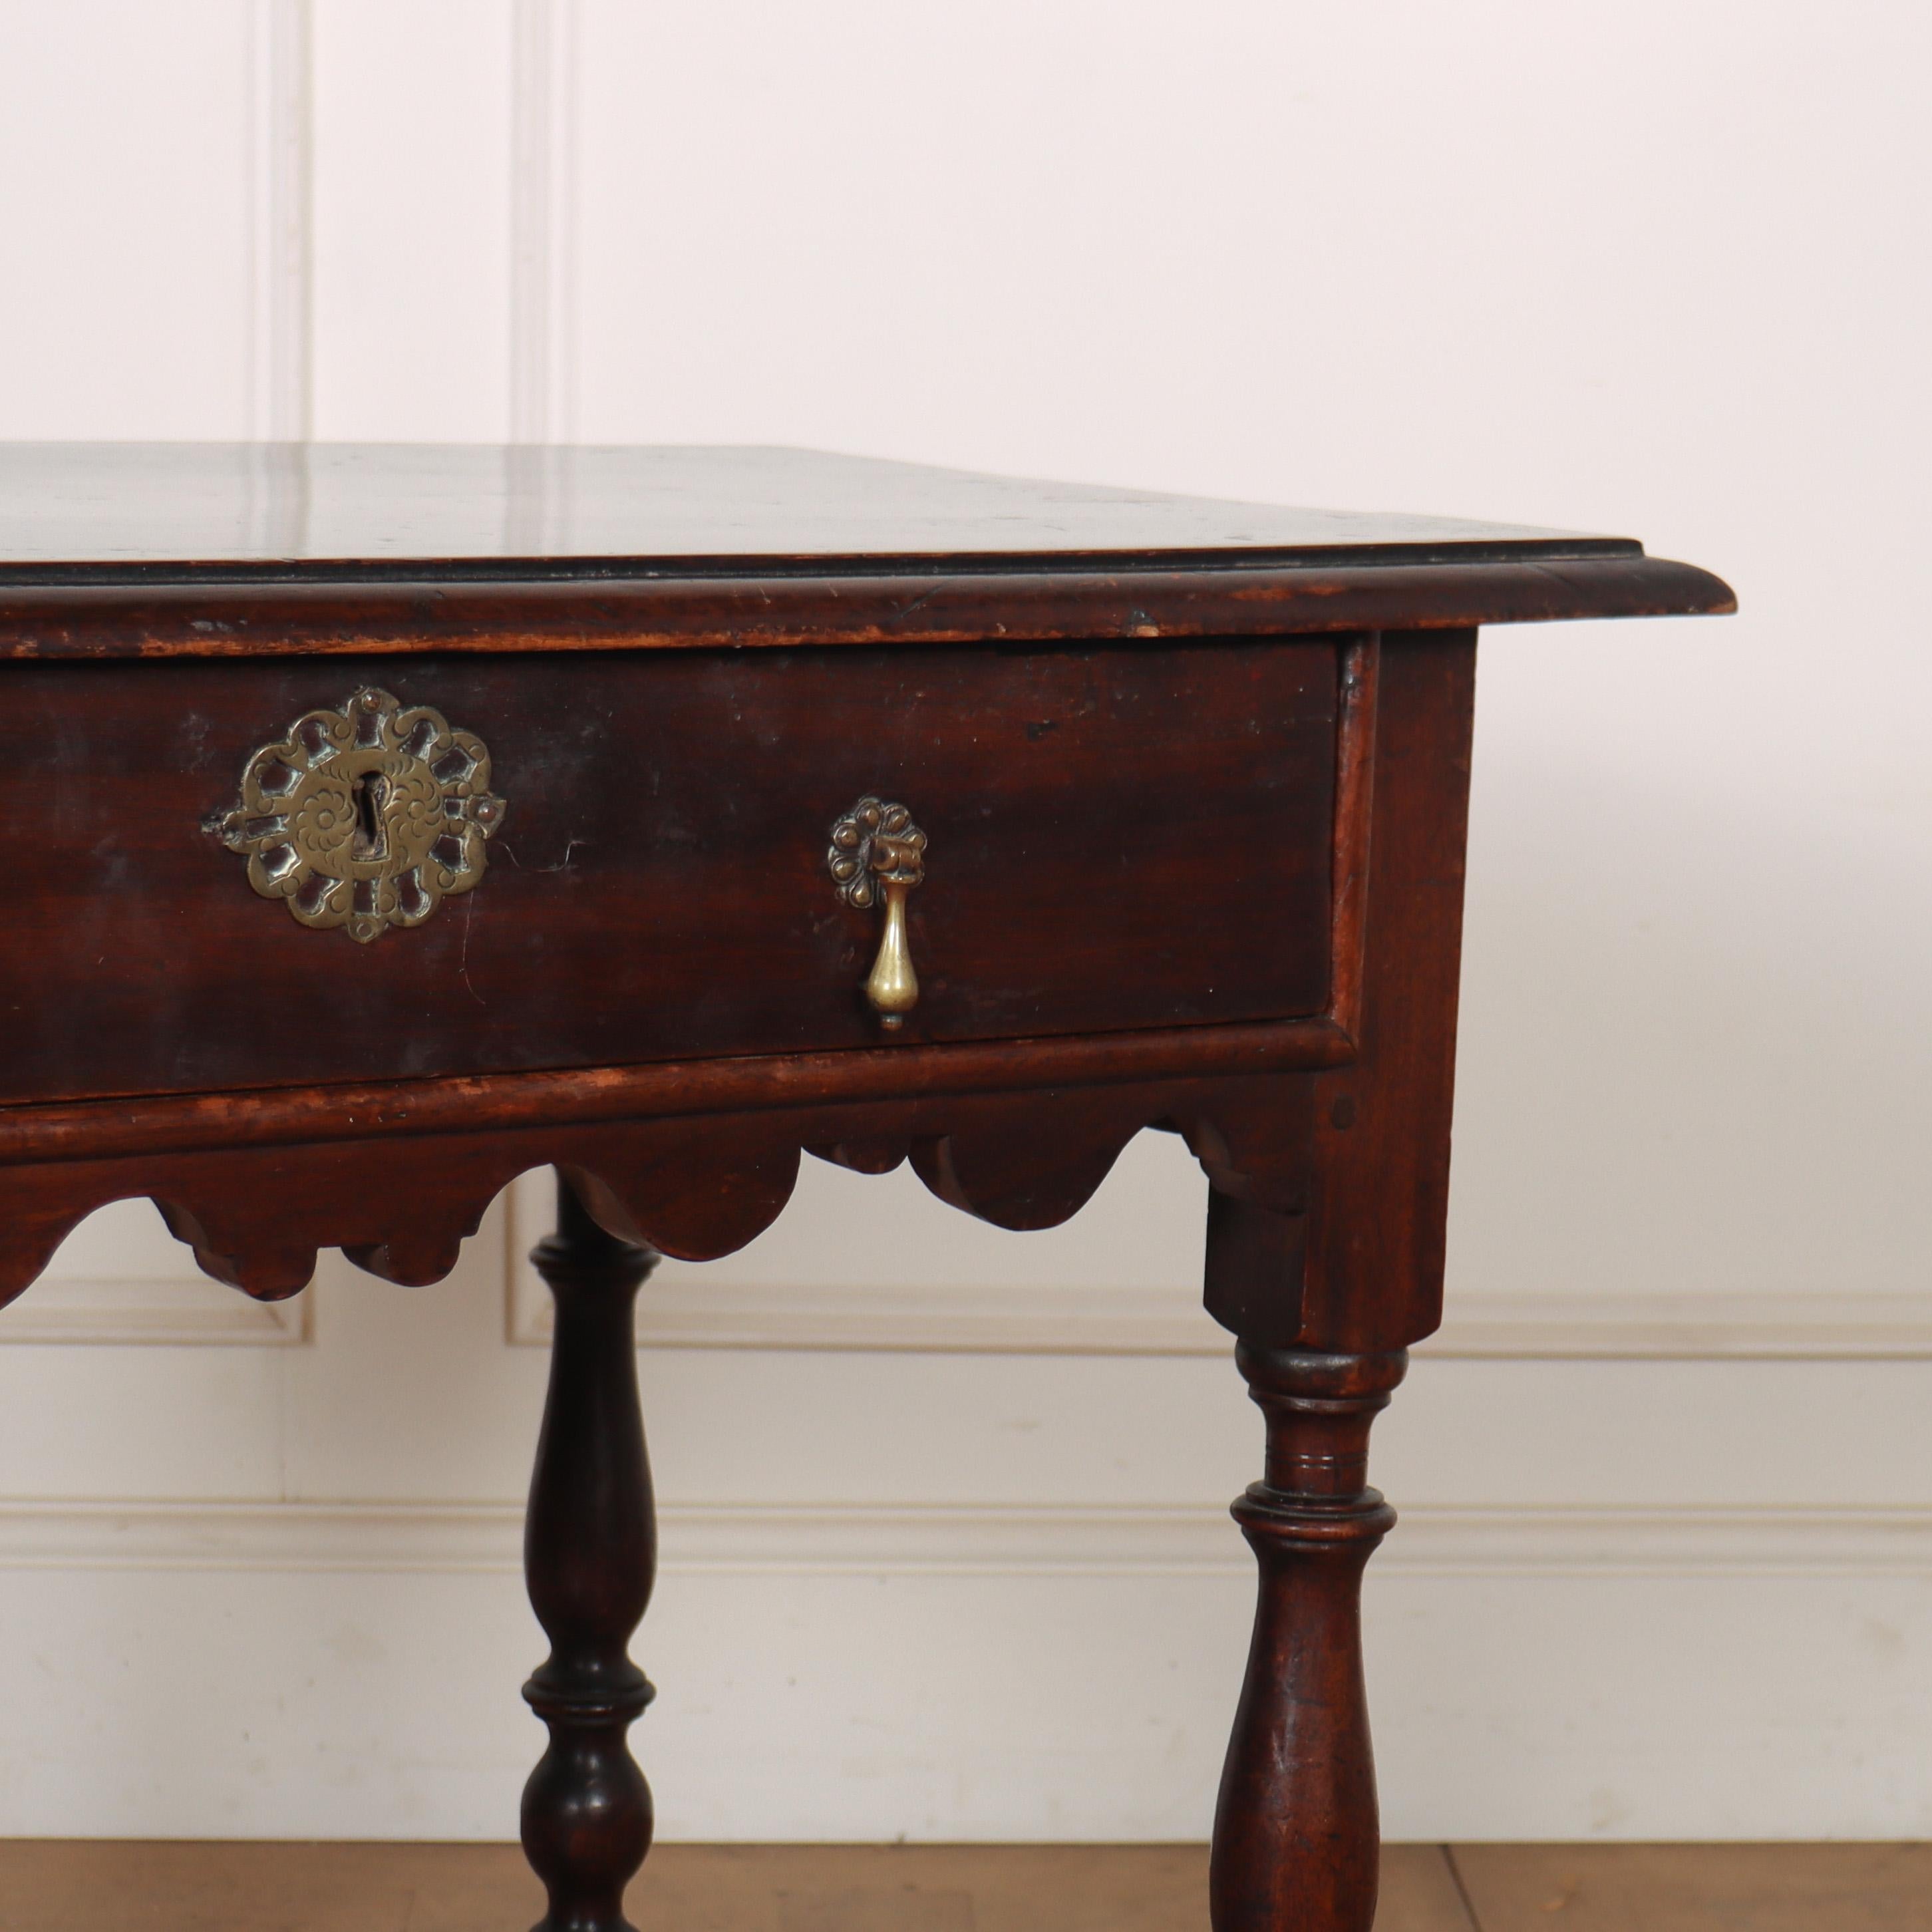 George I Table d'appoint anglaise du XVIIIe siècle en vente